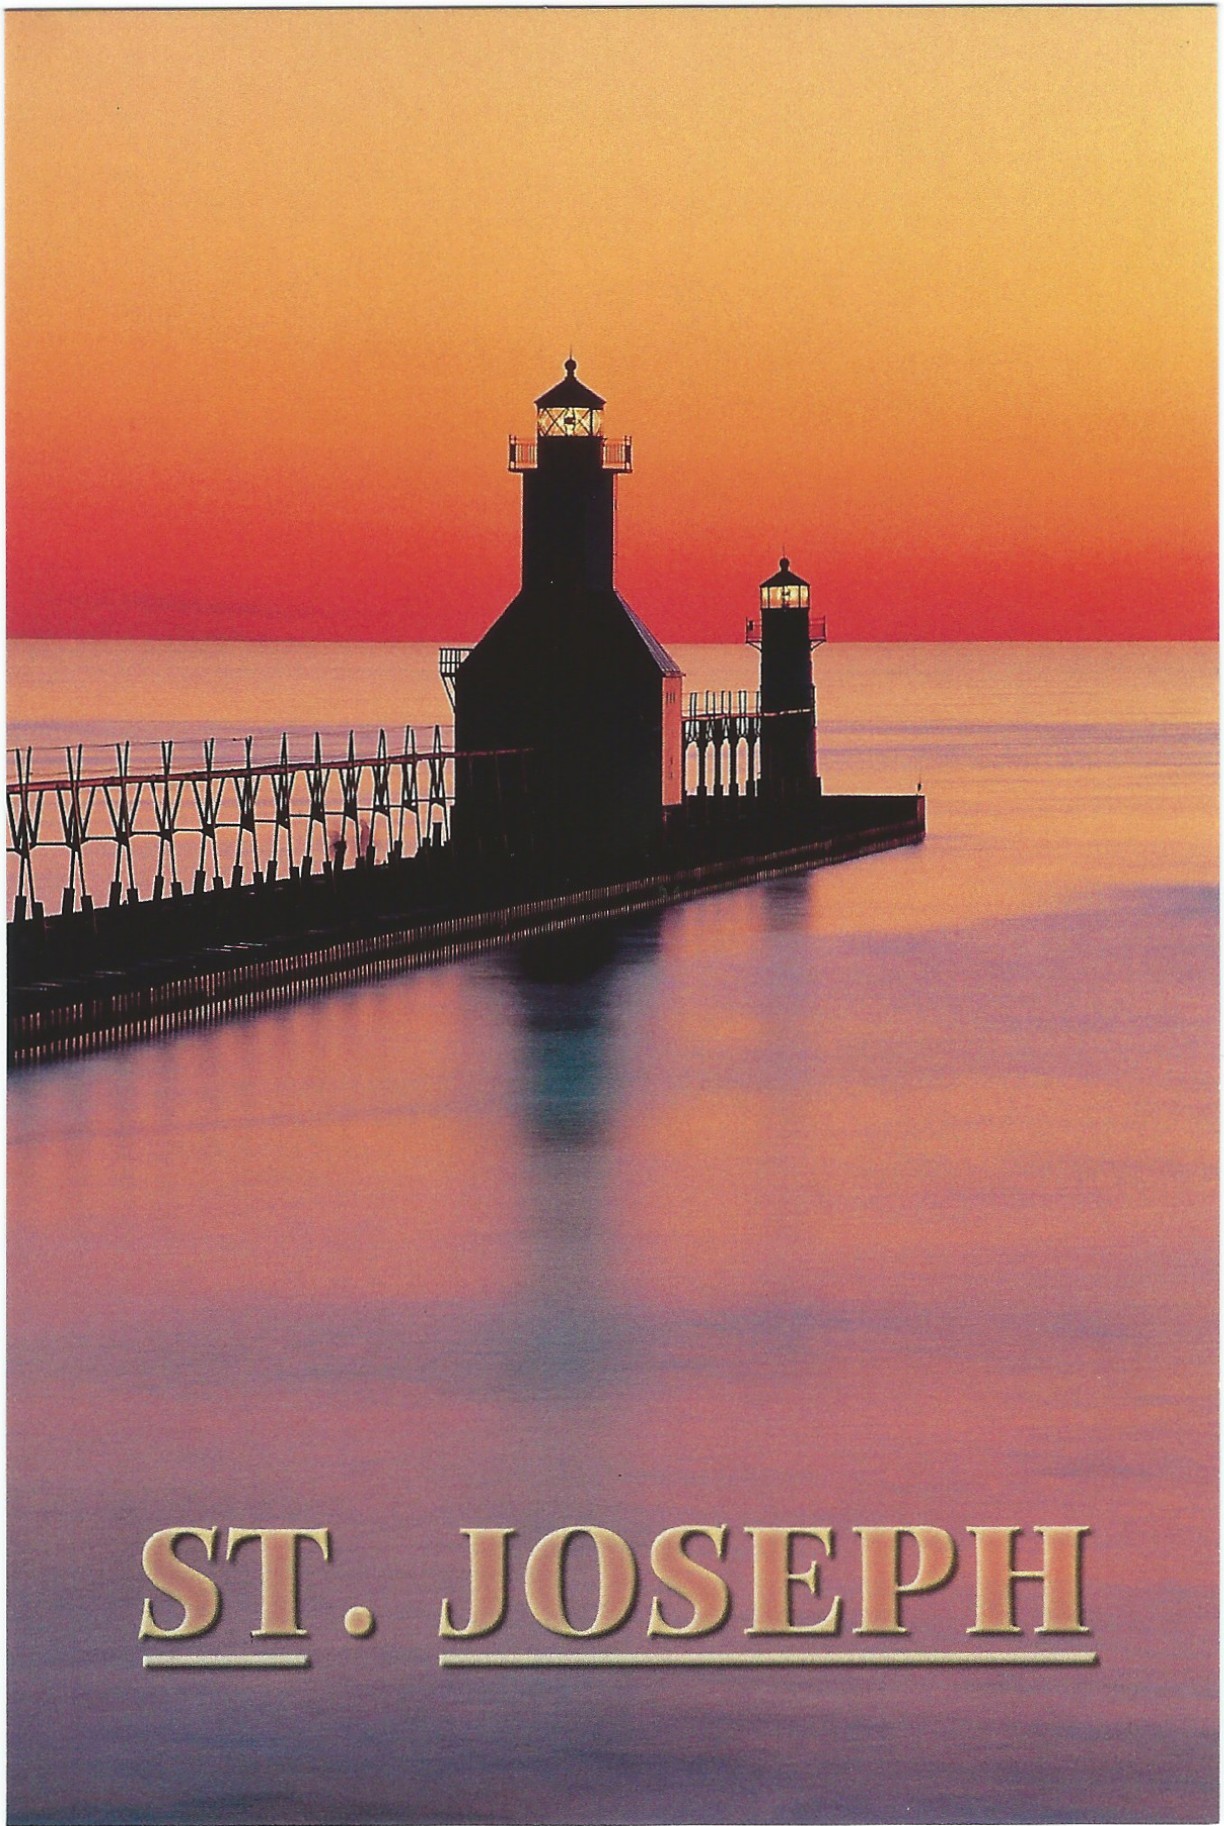 St. Joseph North Pier Inner and Outer Pier Light Sunset Postcard